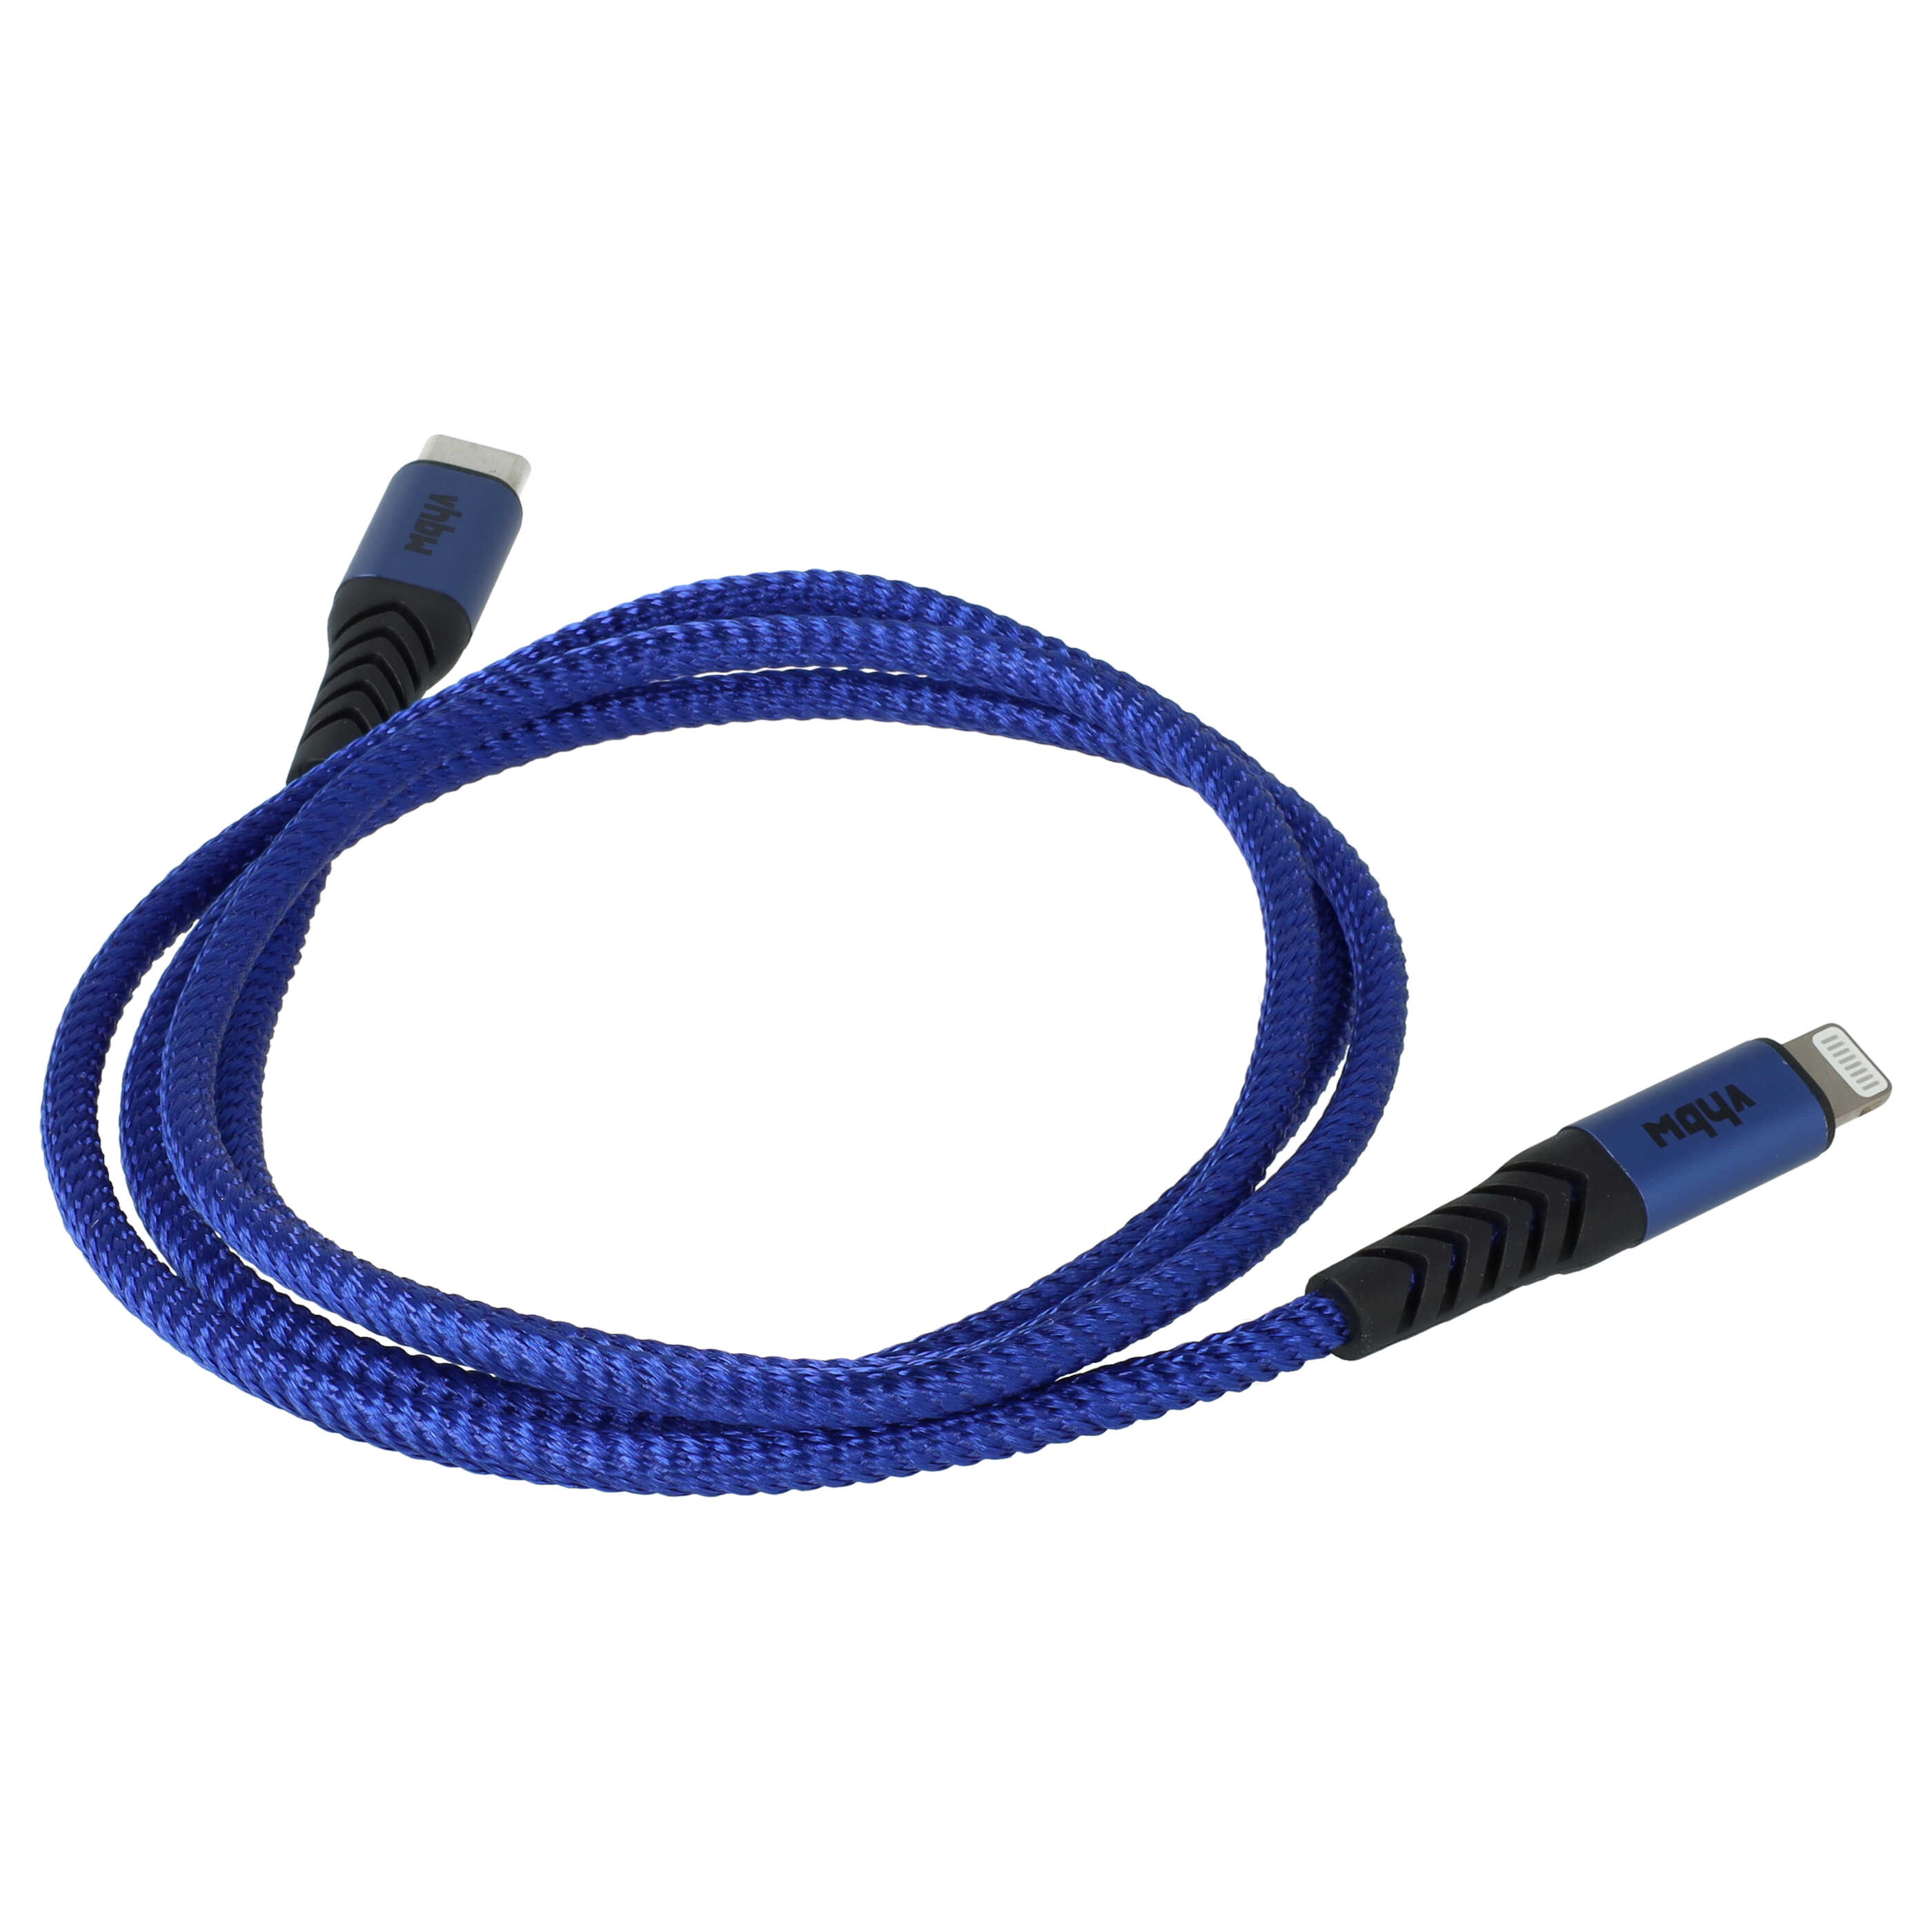 Cable lightning a USB C, Thunderbolt 3 para dispositivos Apple iOS Apple MacBook - negro / azul, 100 cm